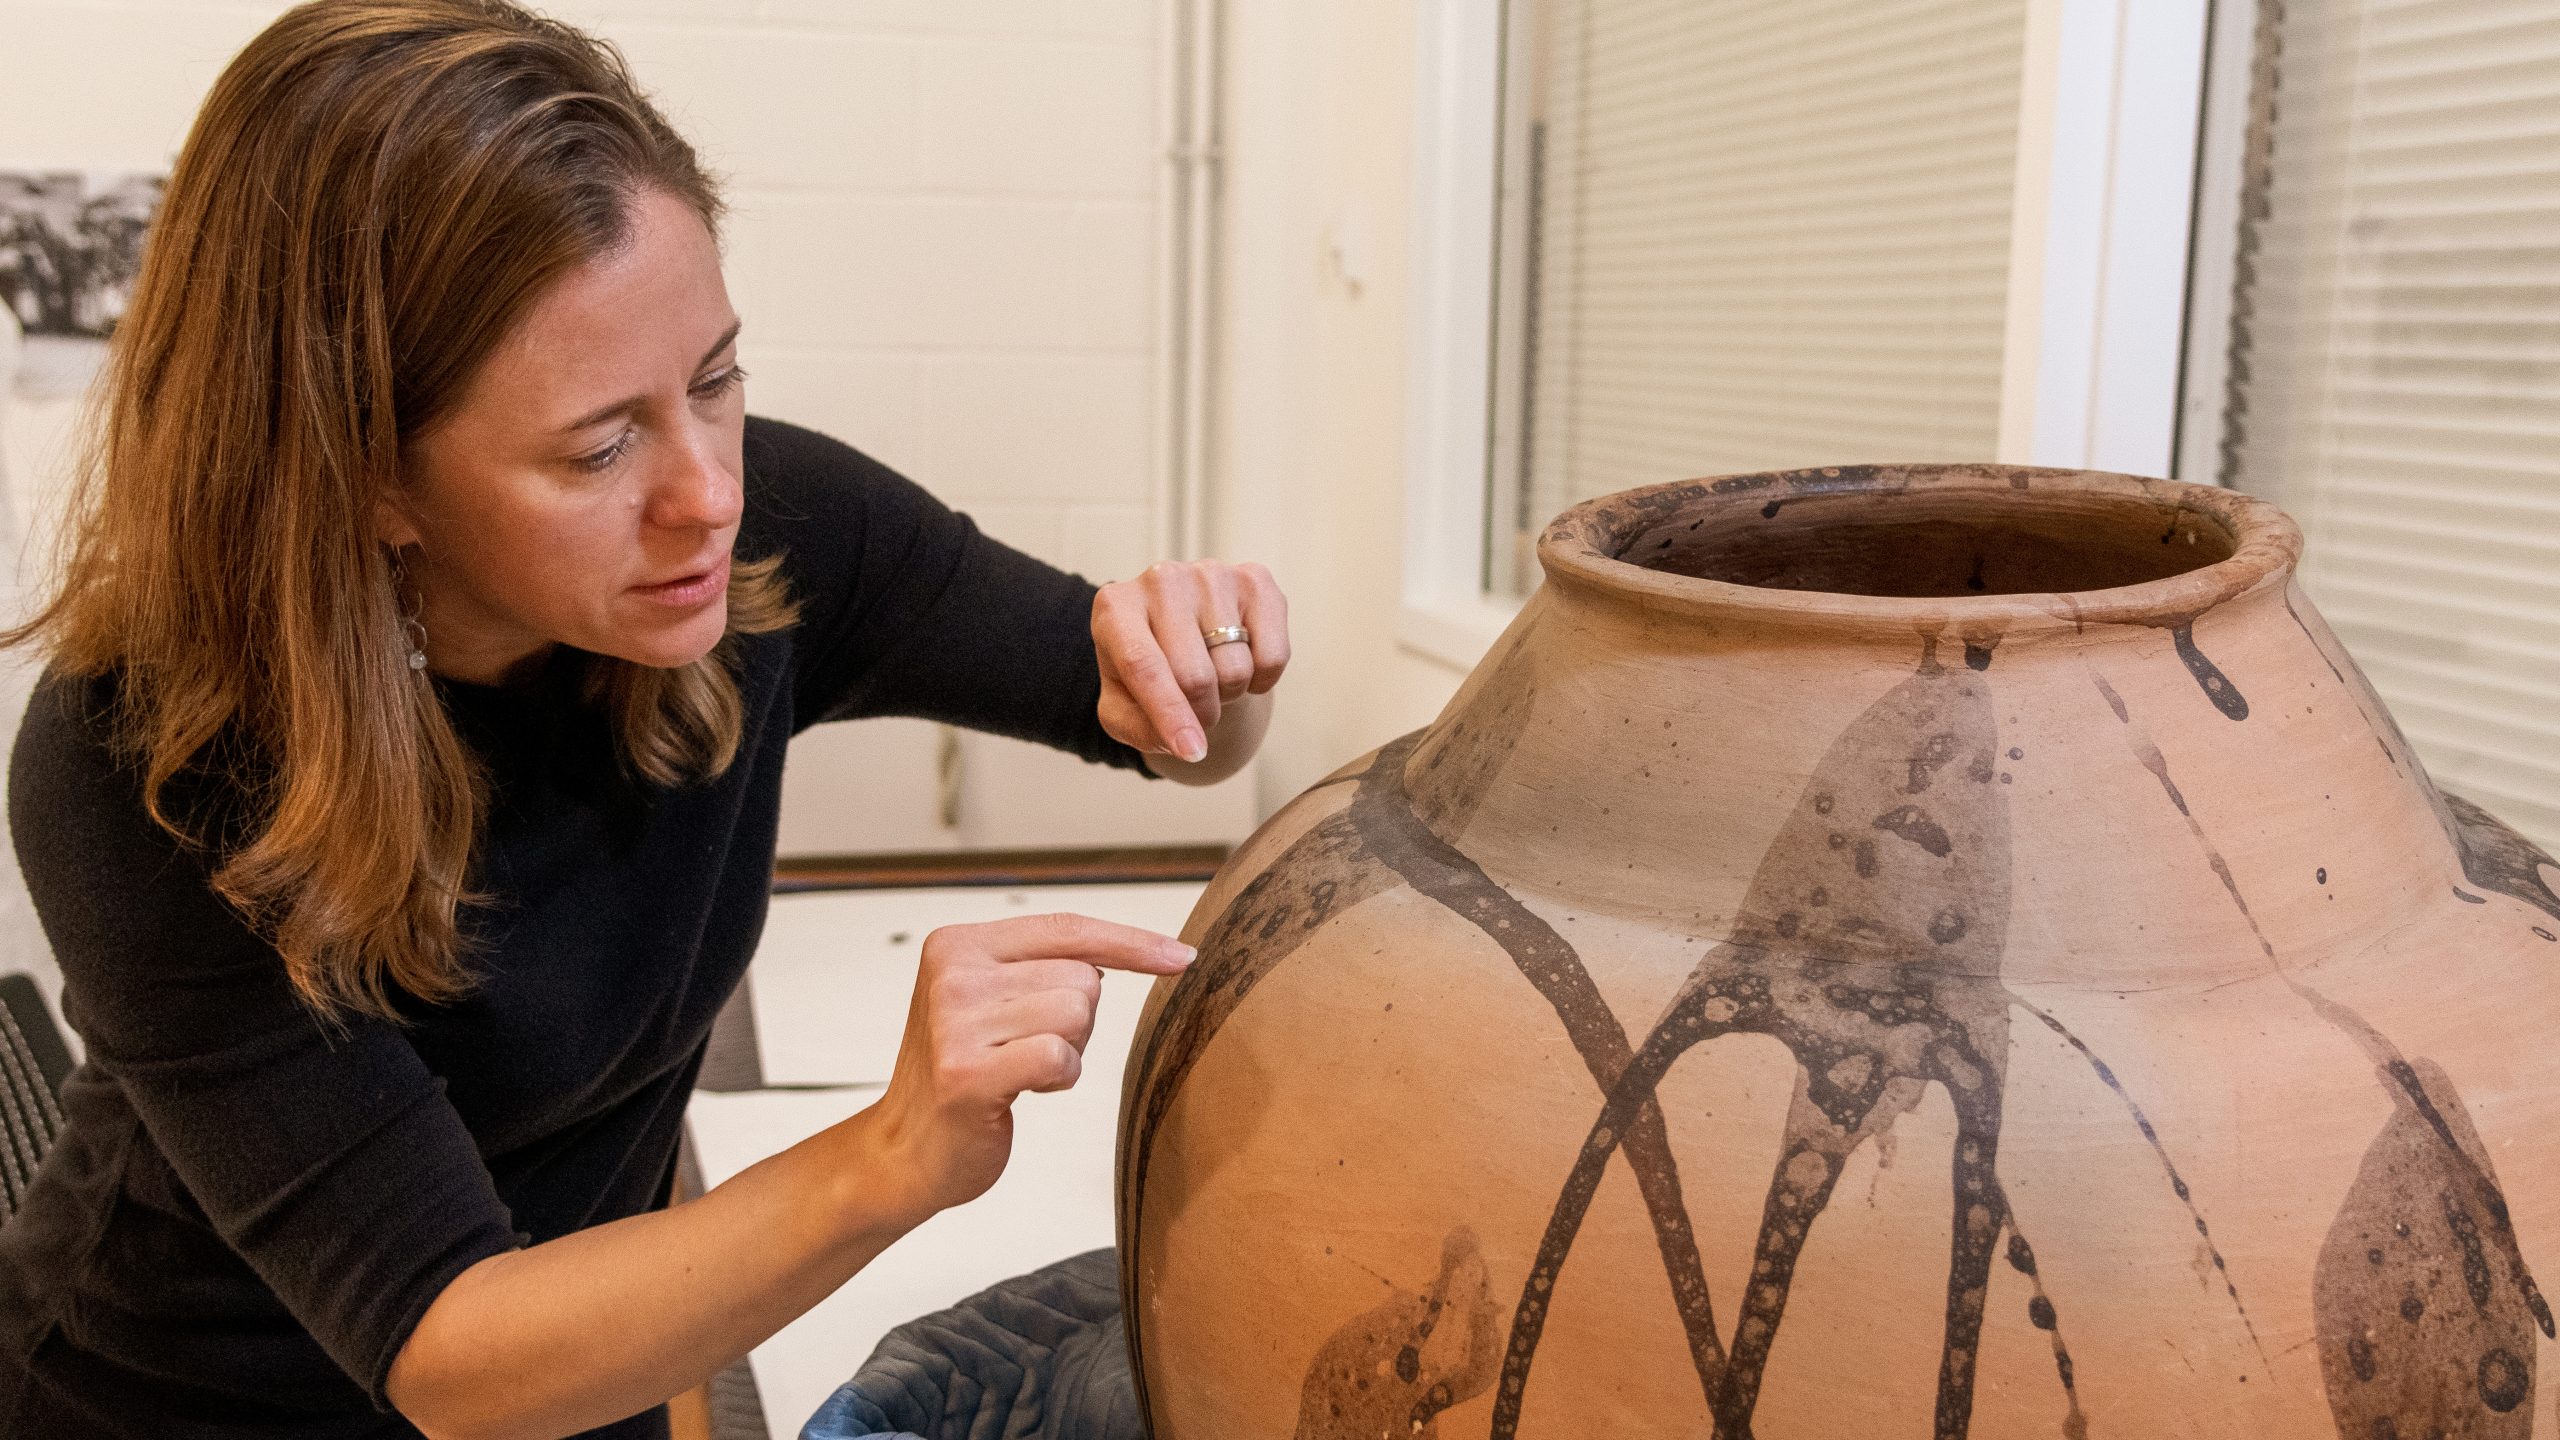 Dr. Elizabeth Perrill evaluating a piece of ceramics.